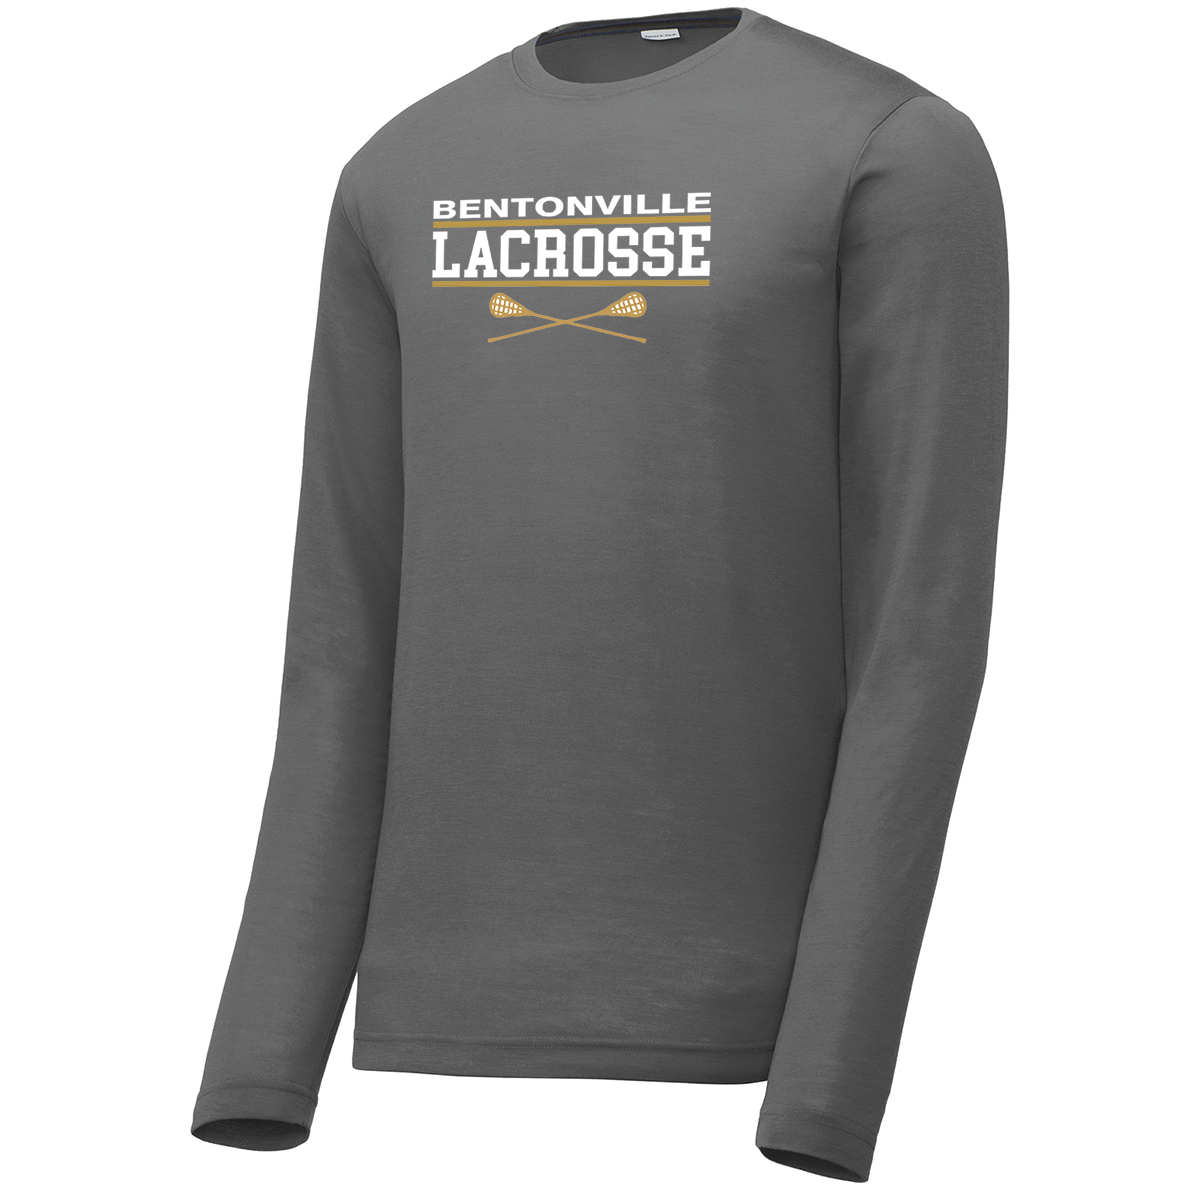 Bentonville Lacrosse Long Sleeve CottonTouch Performance Shirt